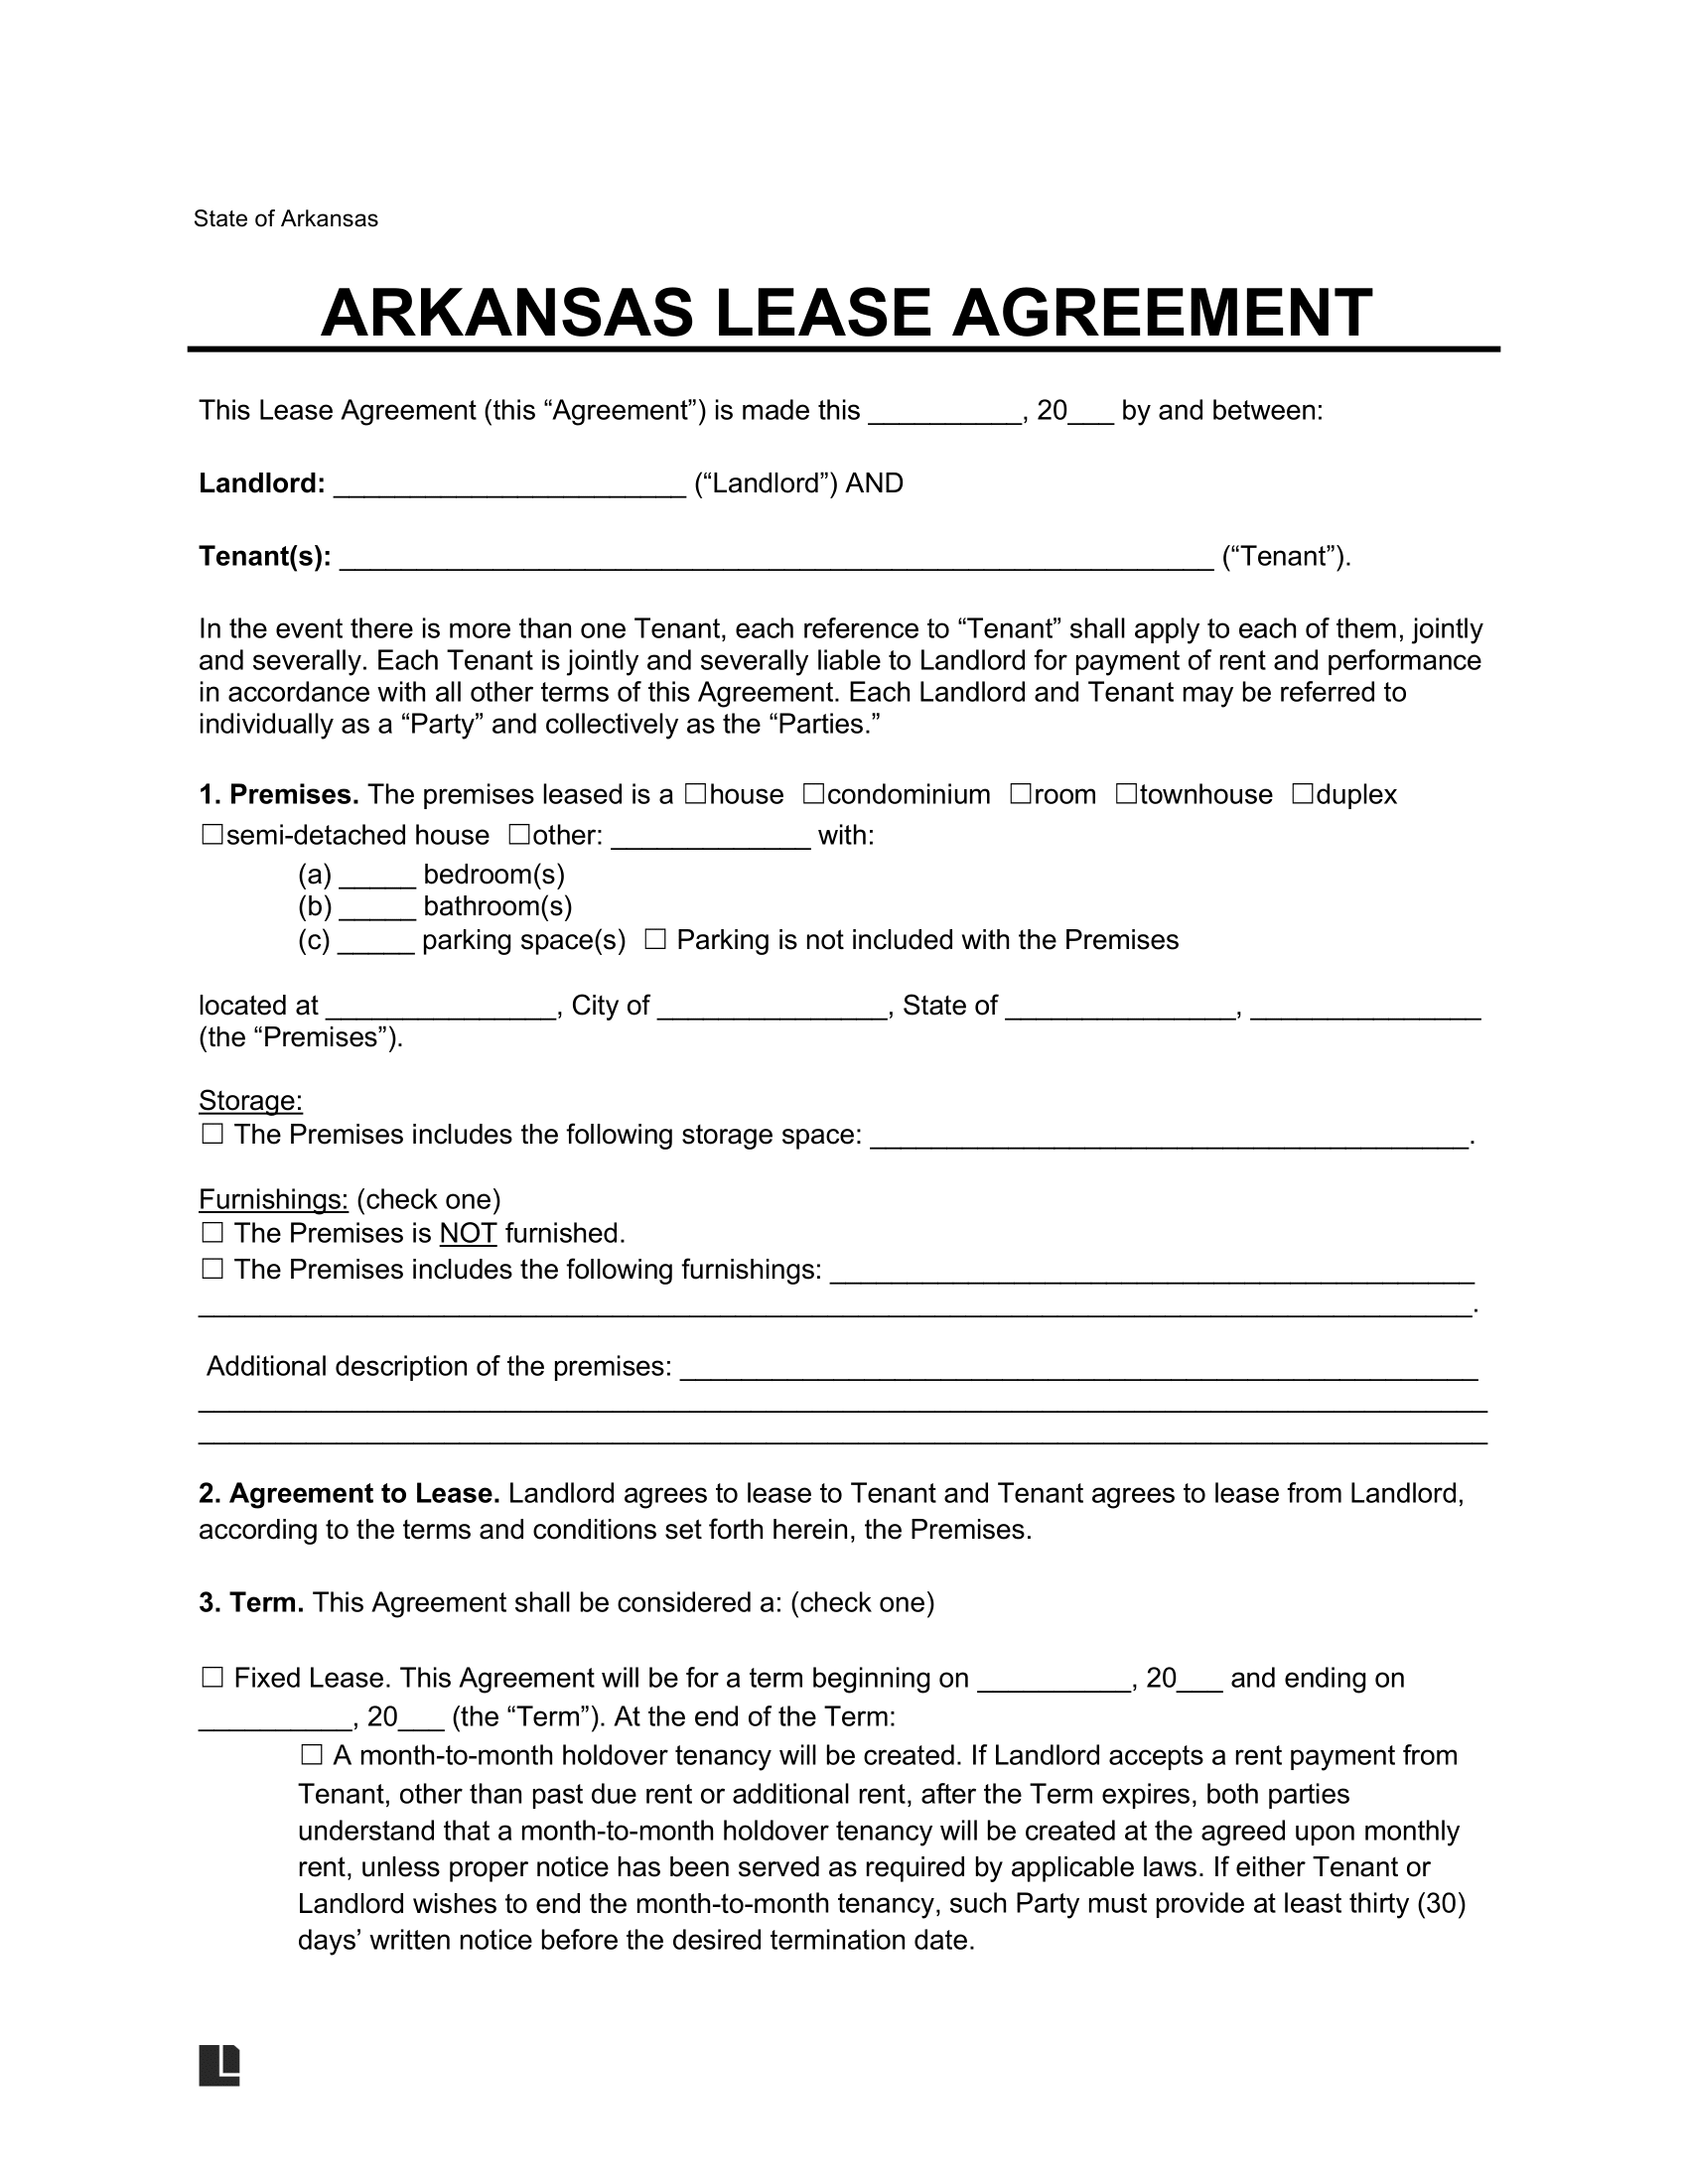 Arkansas Residential Lease Agreement Template